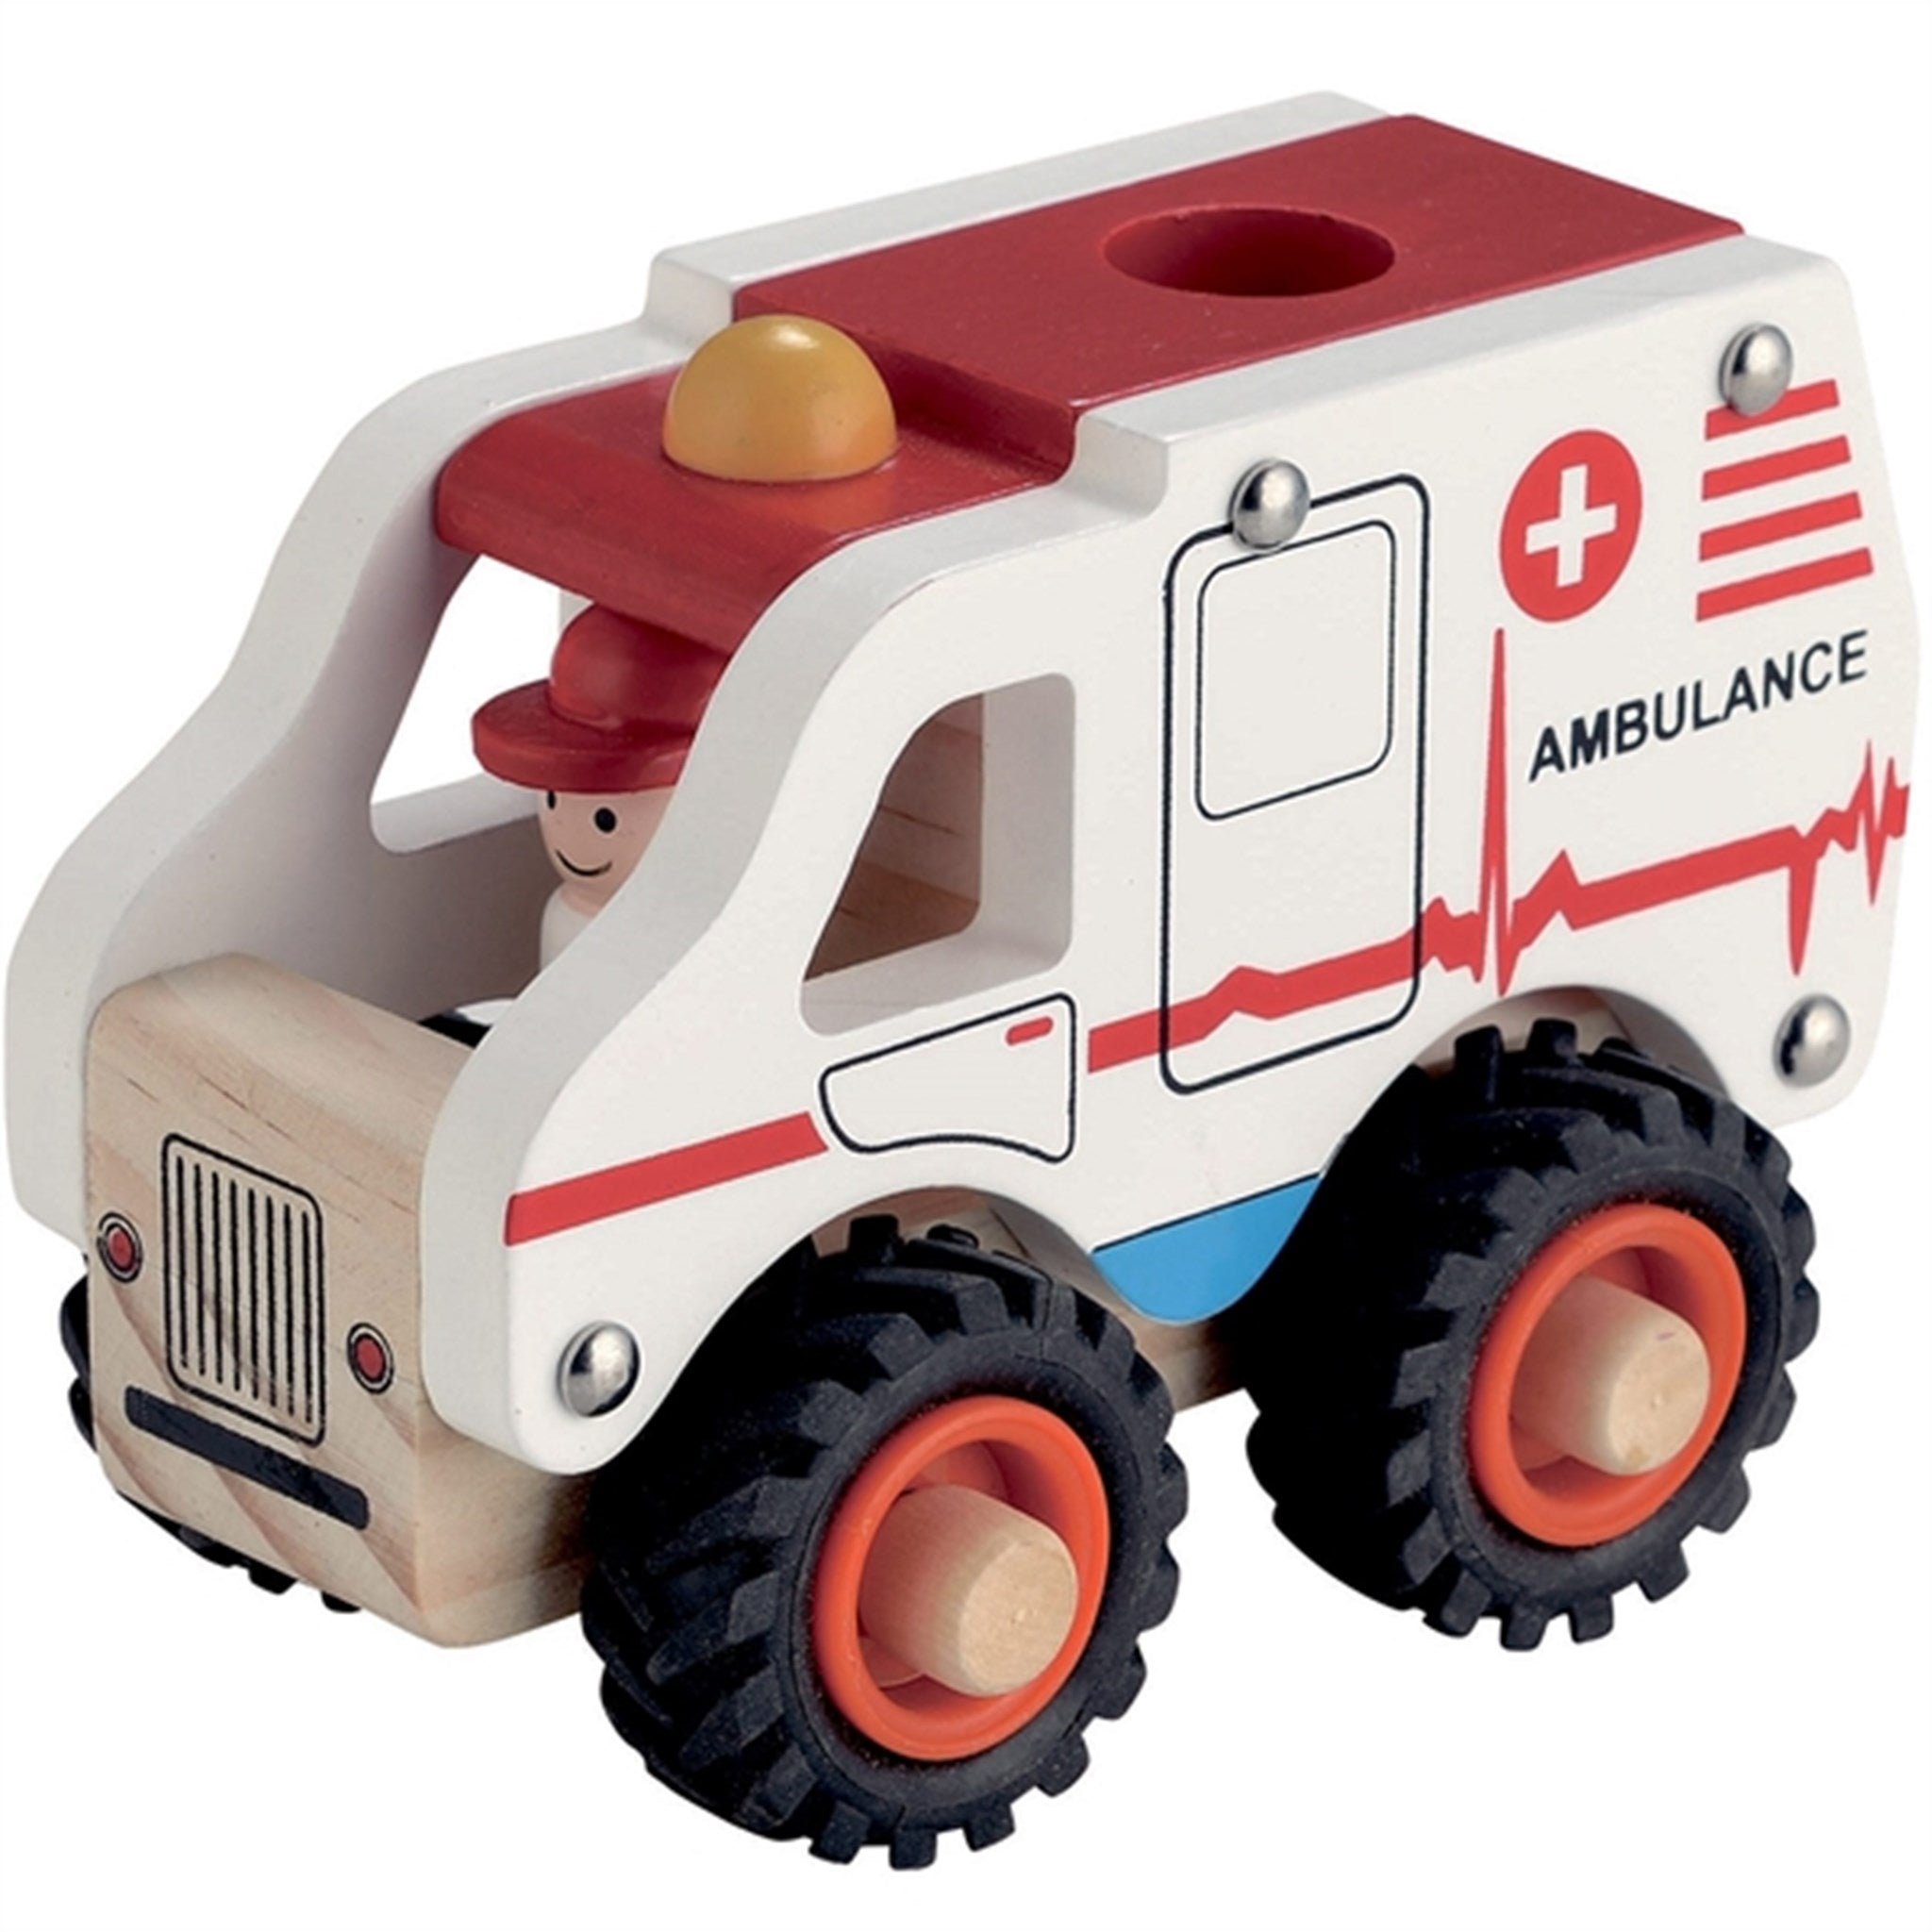 Magni Ambulance